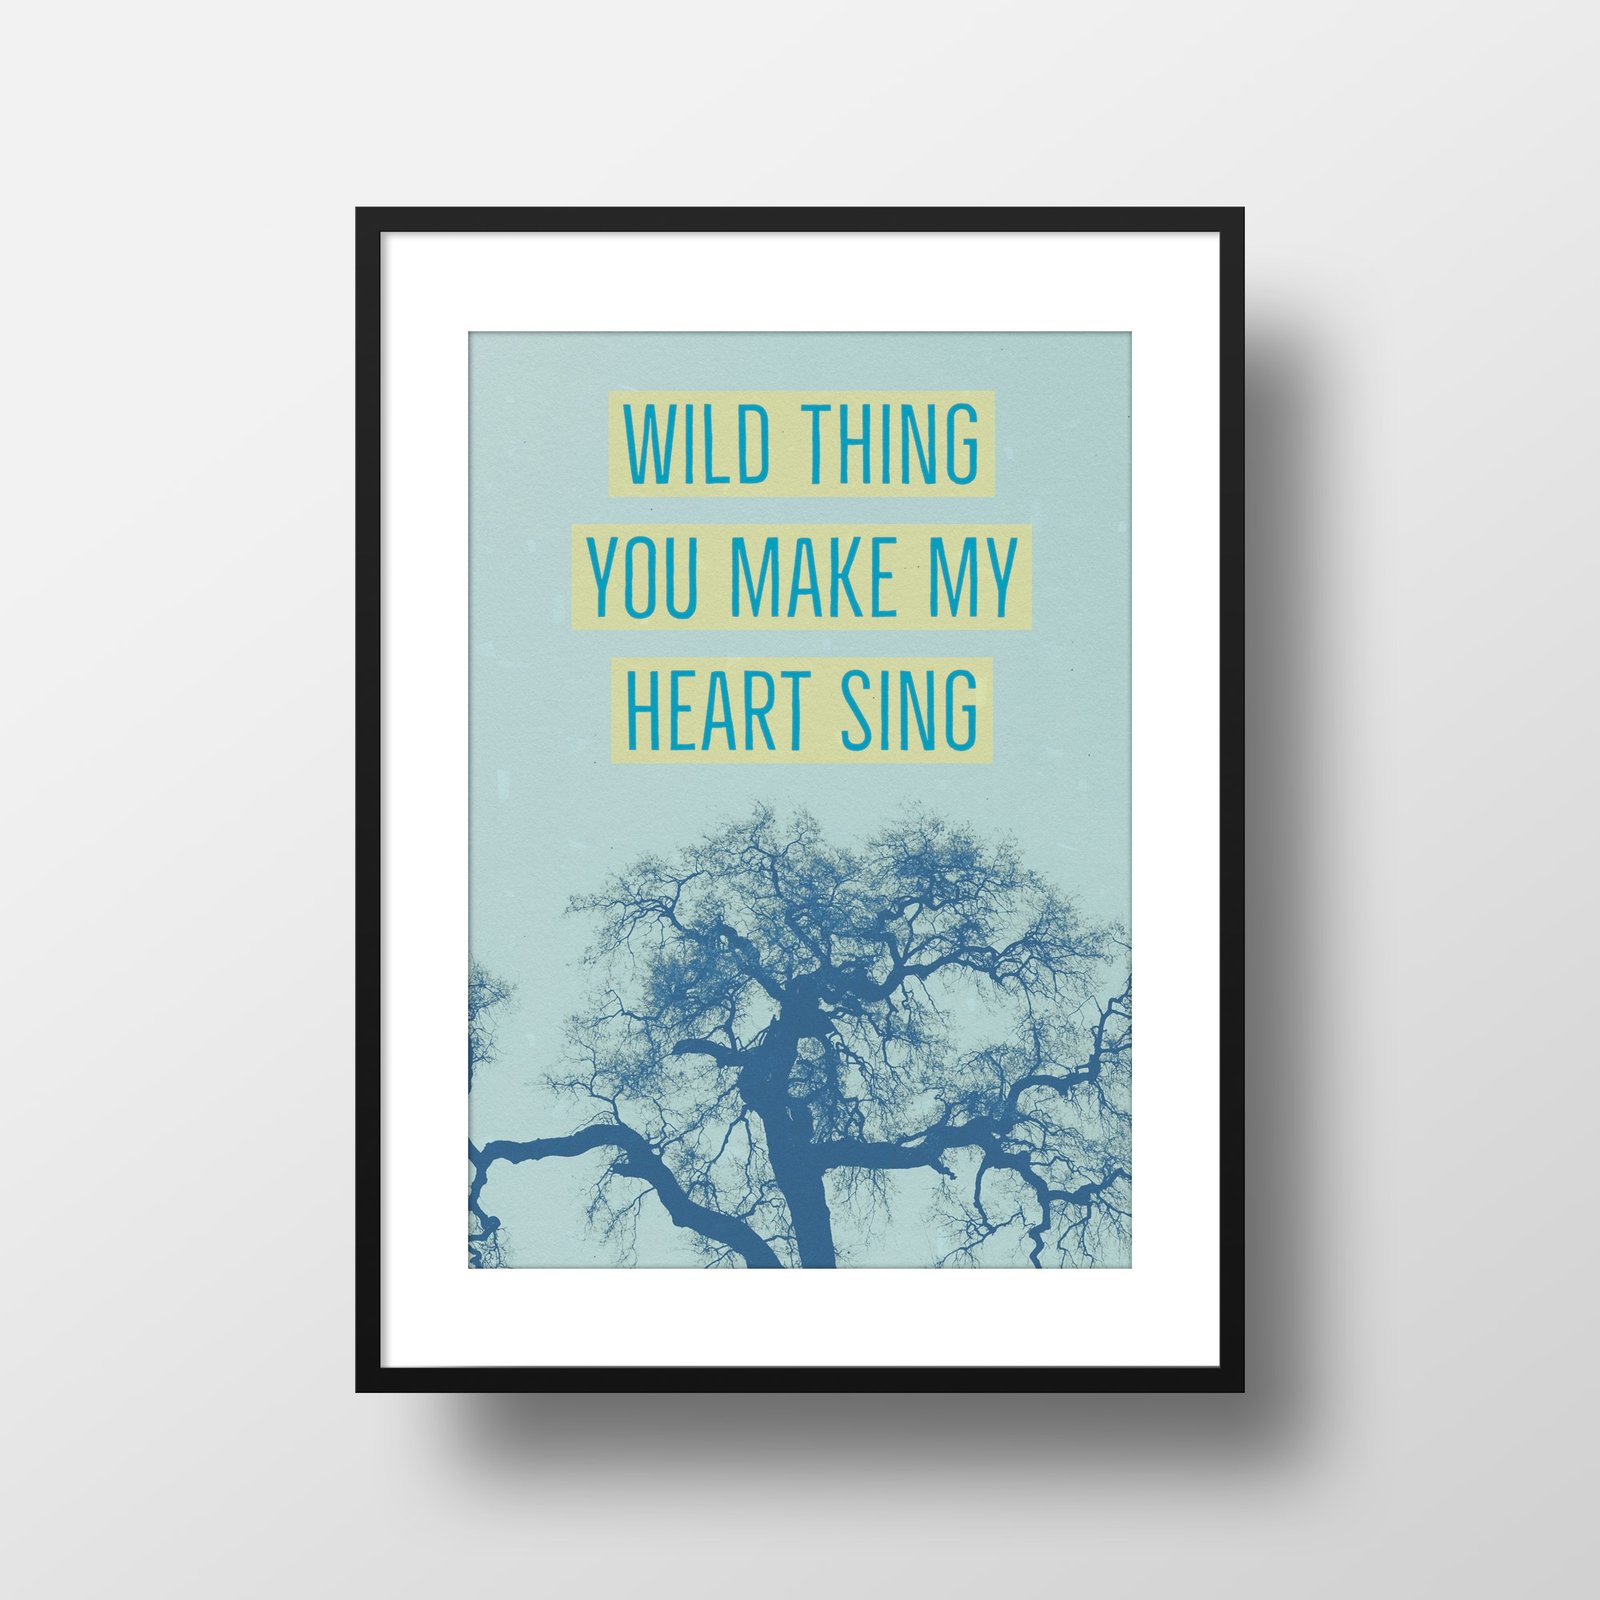 who sang the lyrics, wild thing,you make my heart sing?